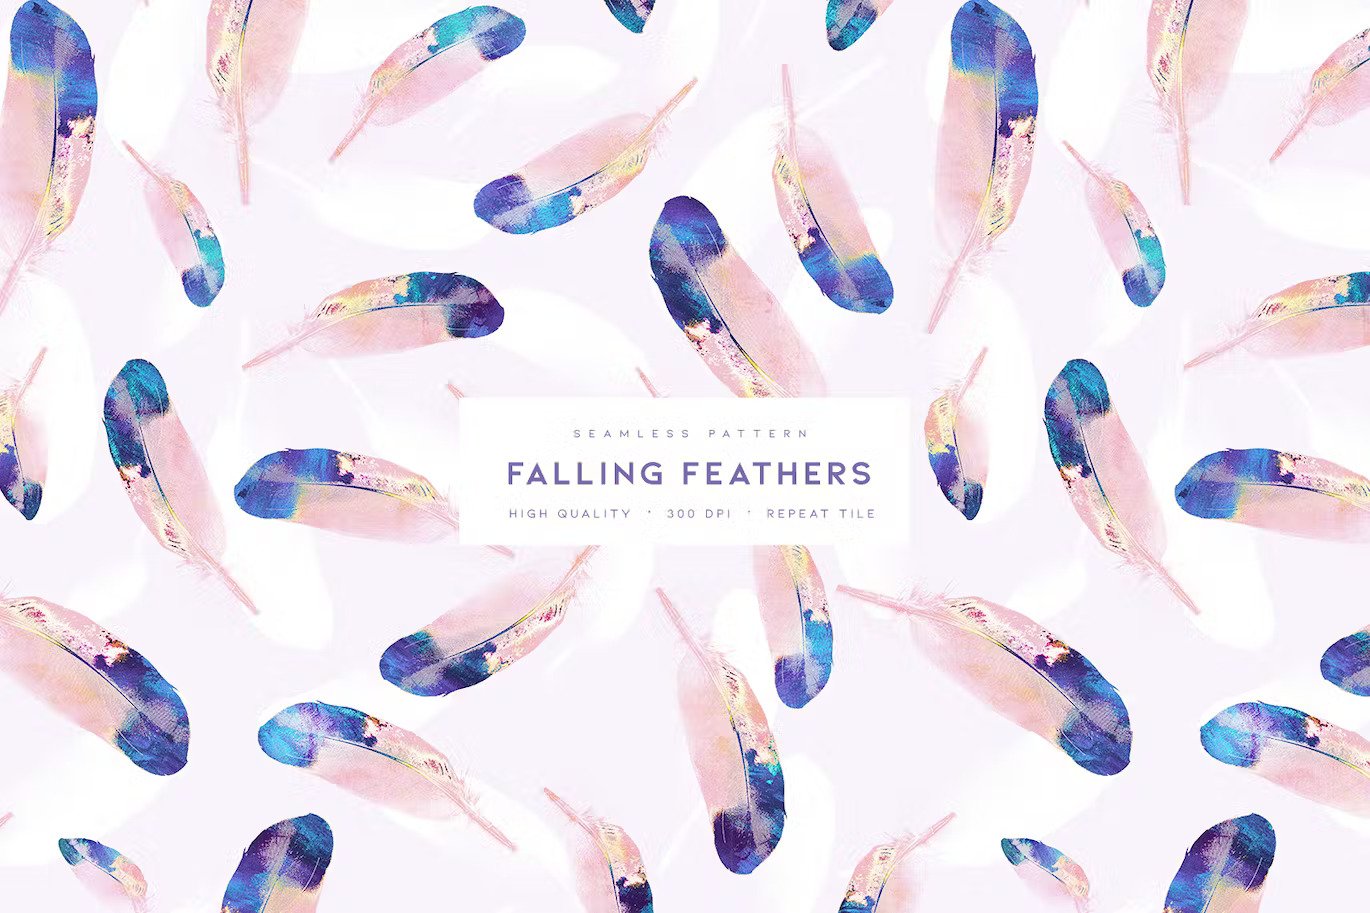 A seamless falling feathers patterns